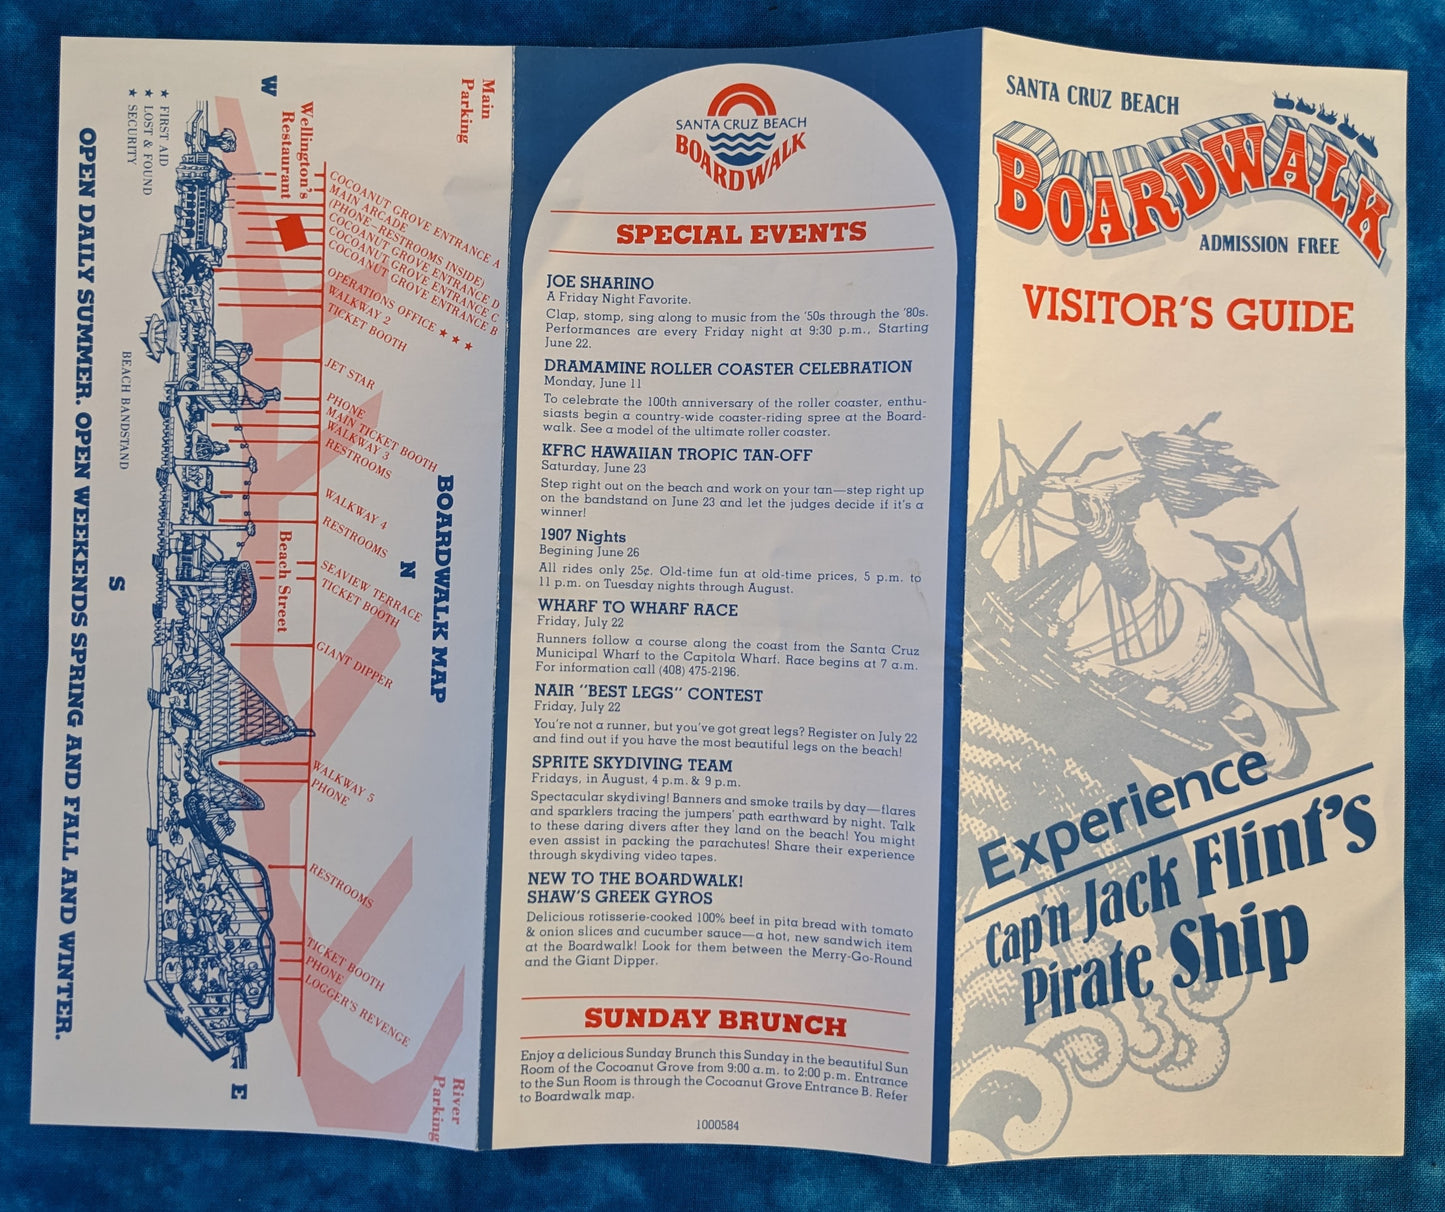 Santa Cruz Beach Boardwalk Visitor's Guide pamphlet back